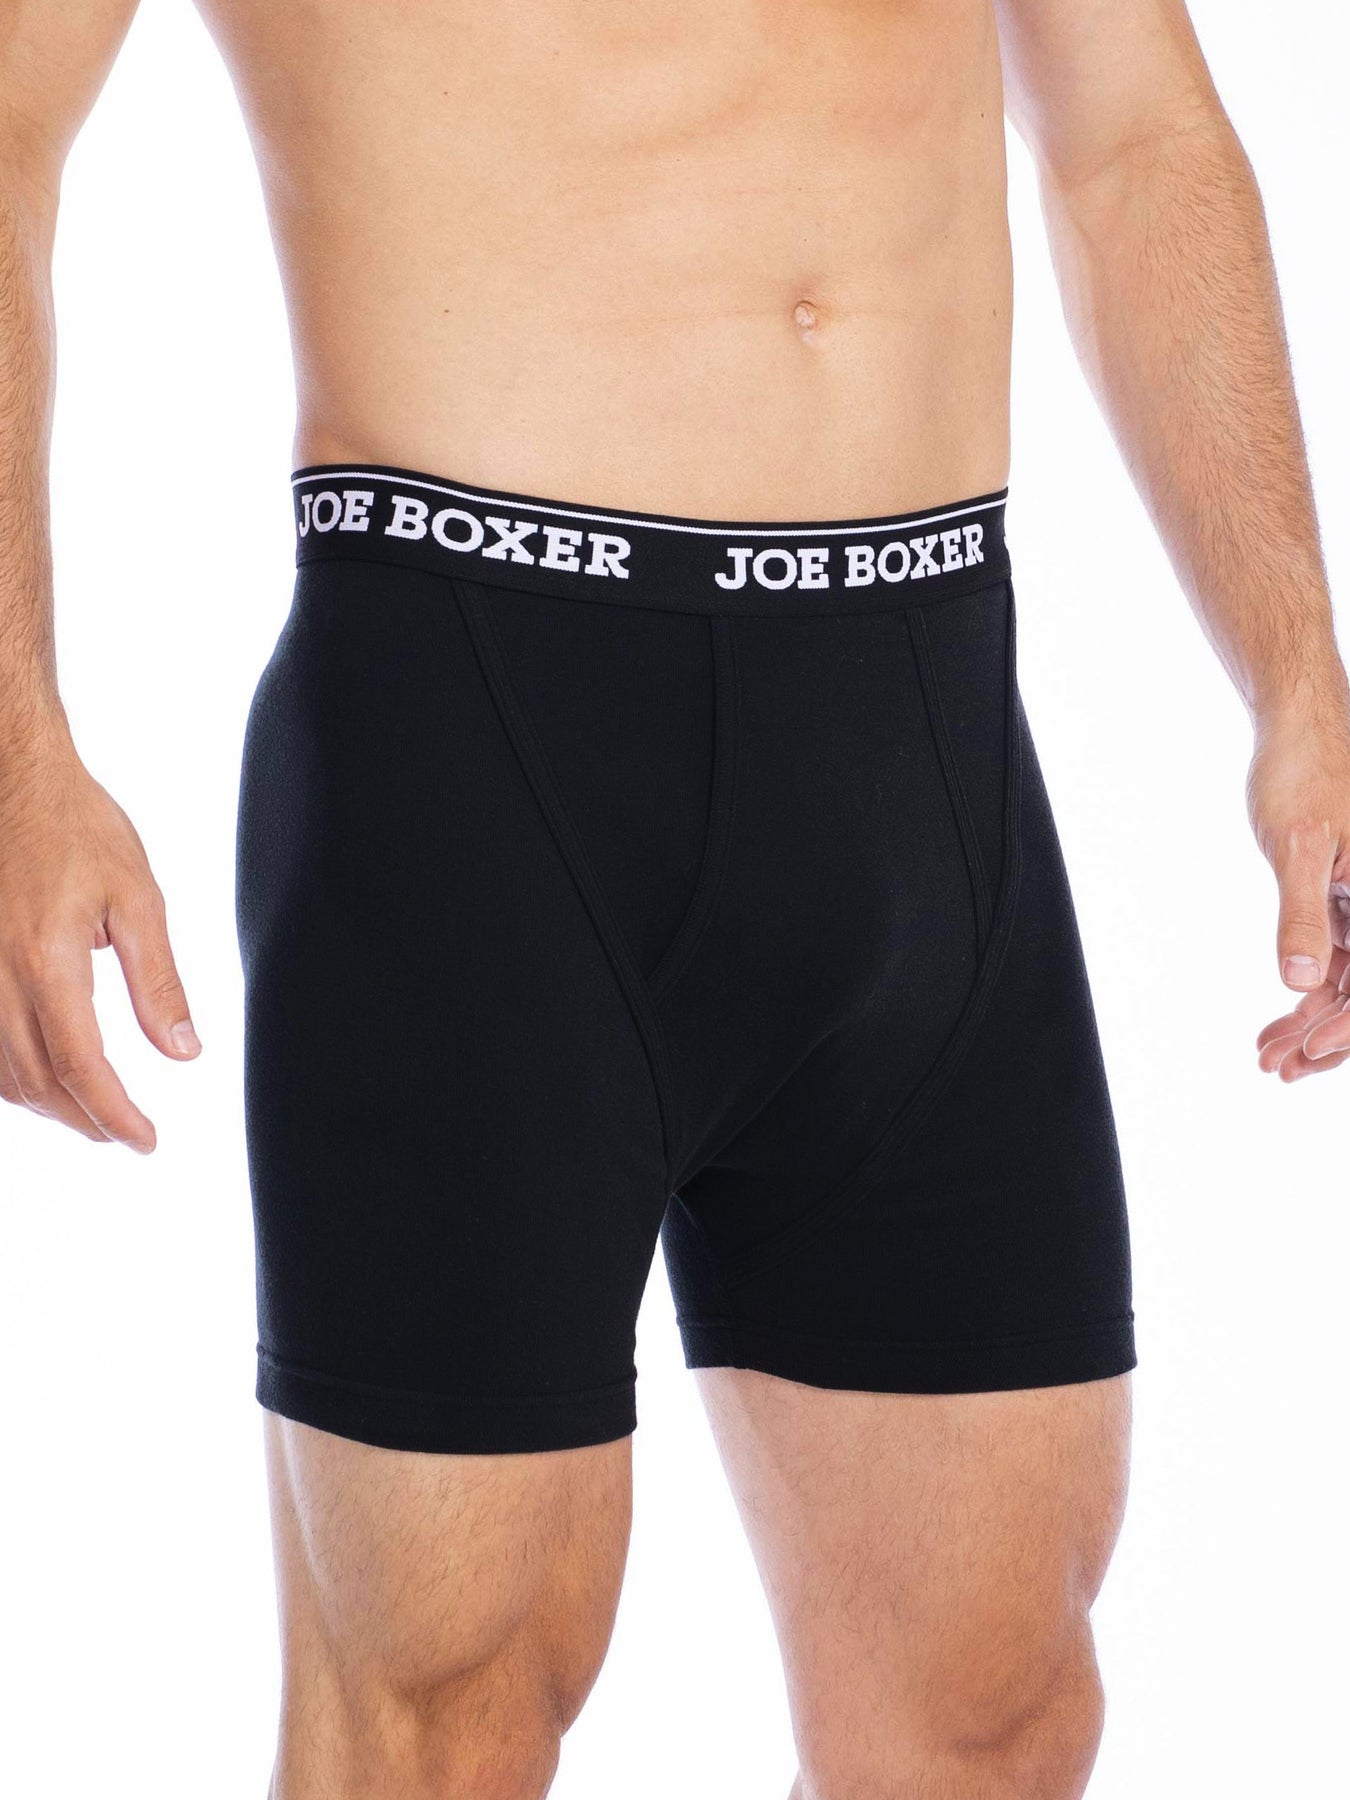 Jockey Men's Underwear Classic Low Rise Brief - 3 Pack, Black, 32 at   Men's Clothing store